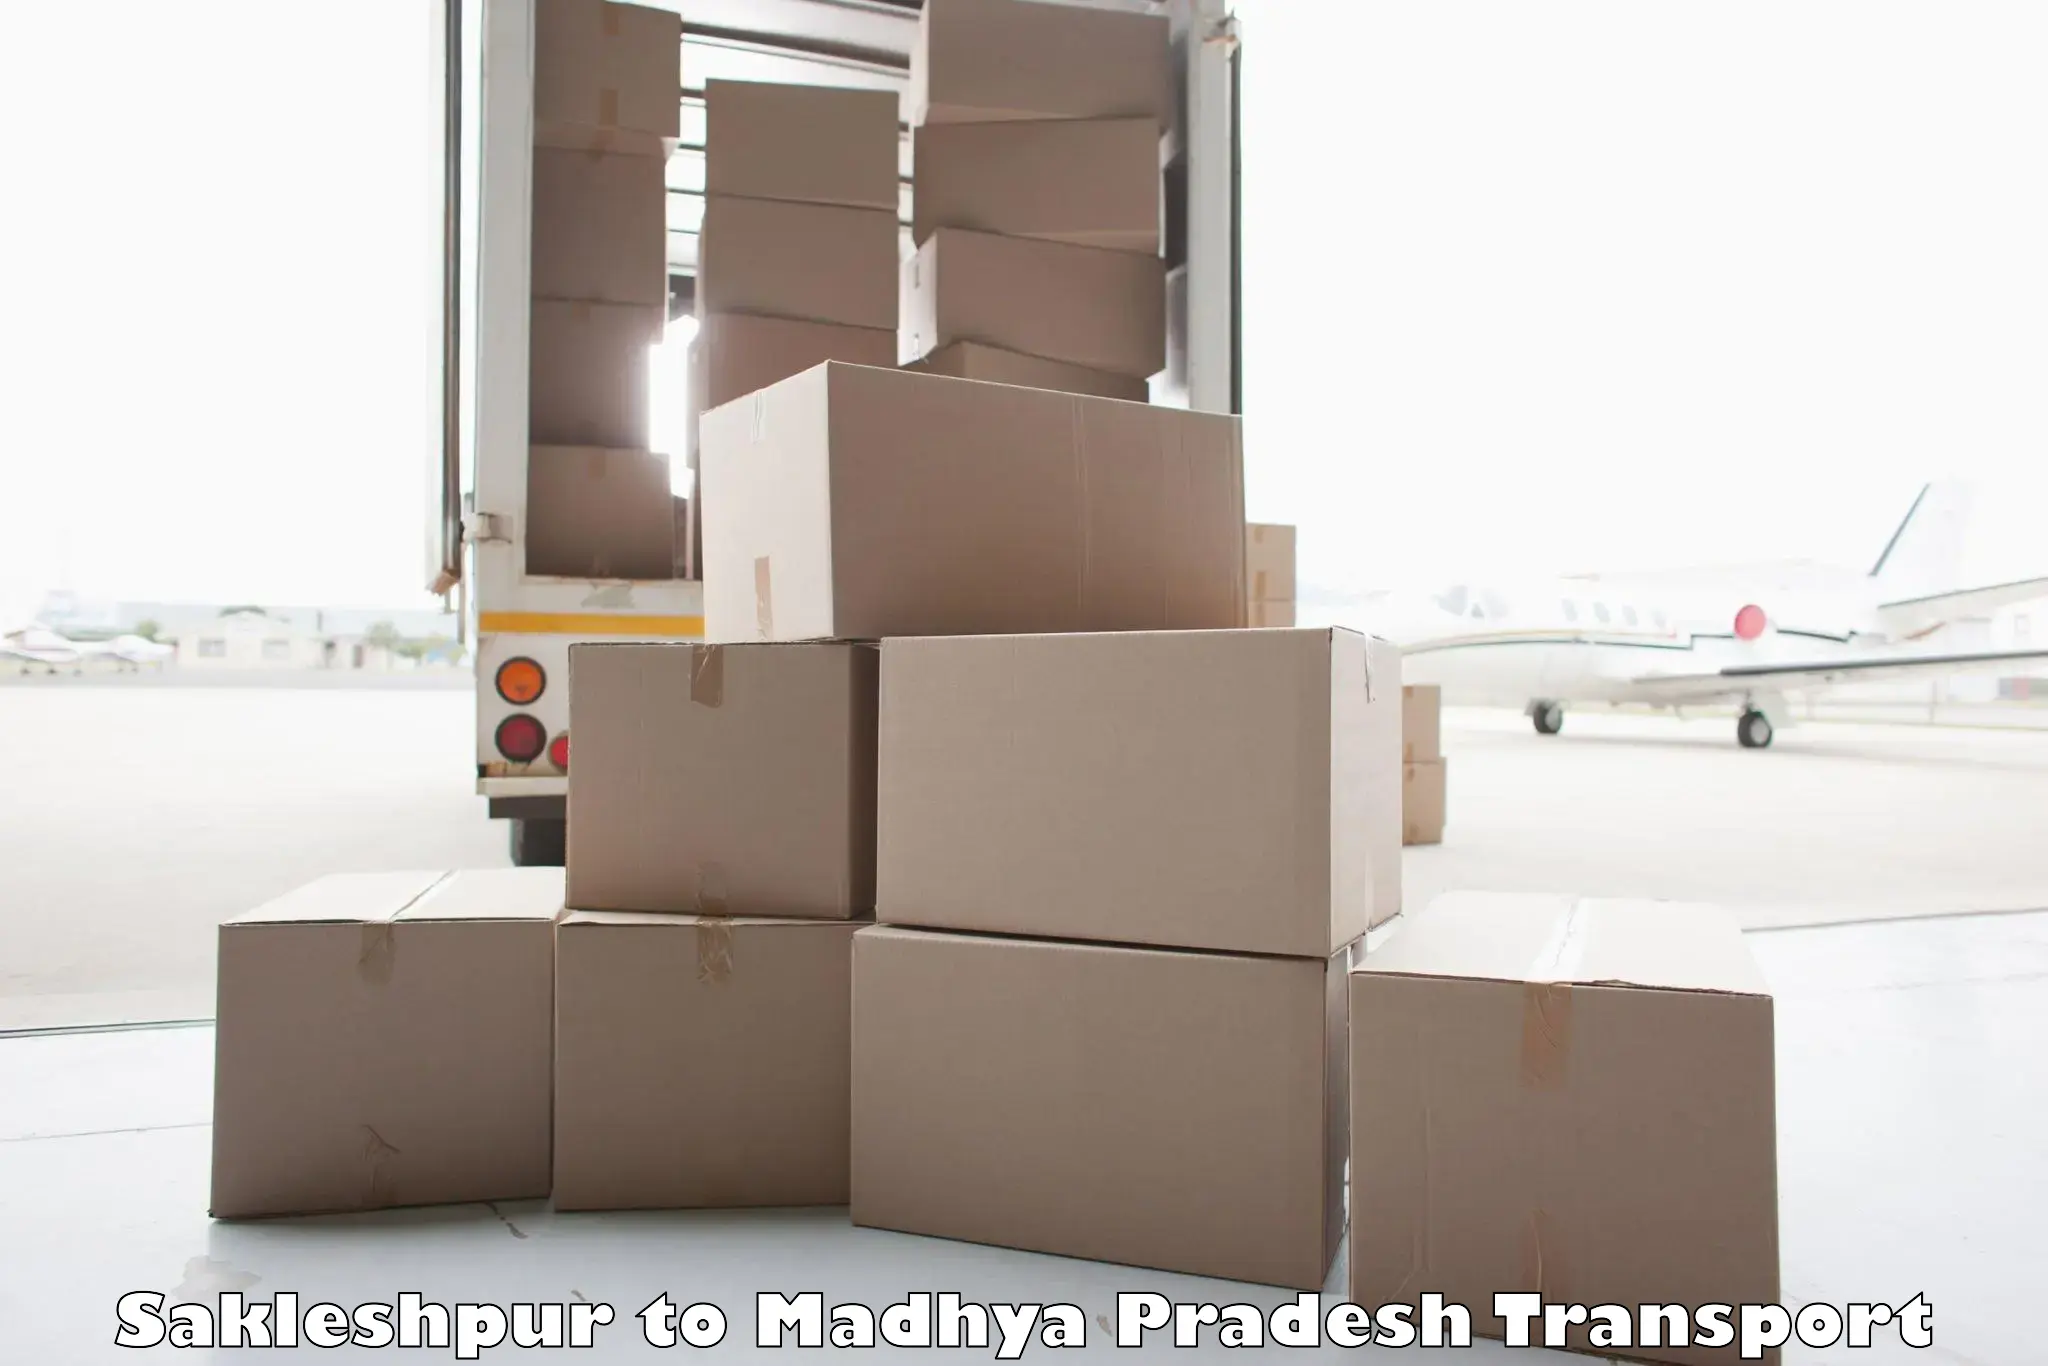 Shipping partner Sakleshpur to Silwani